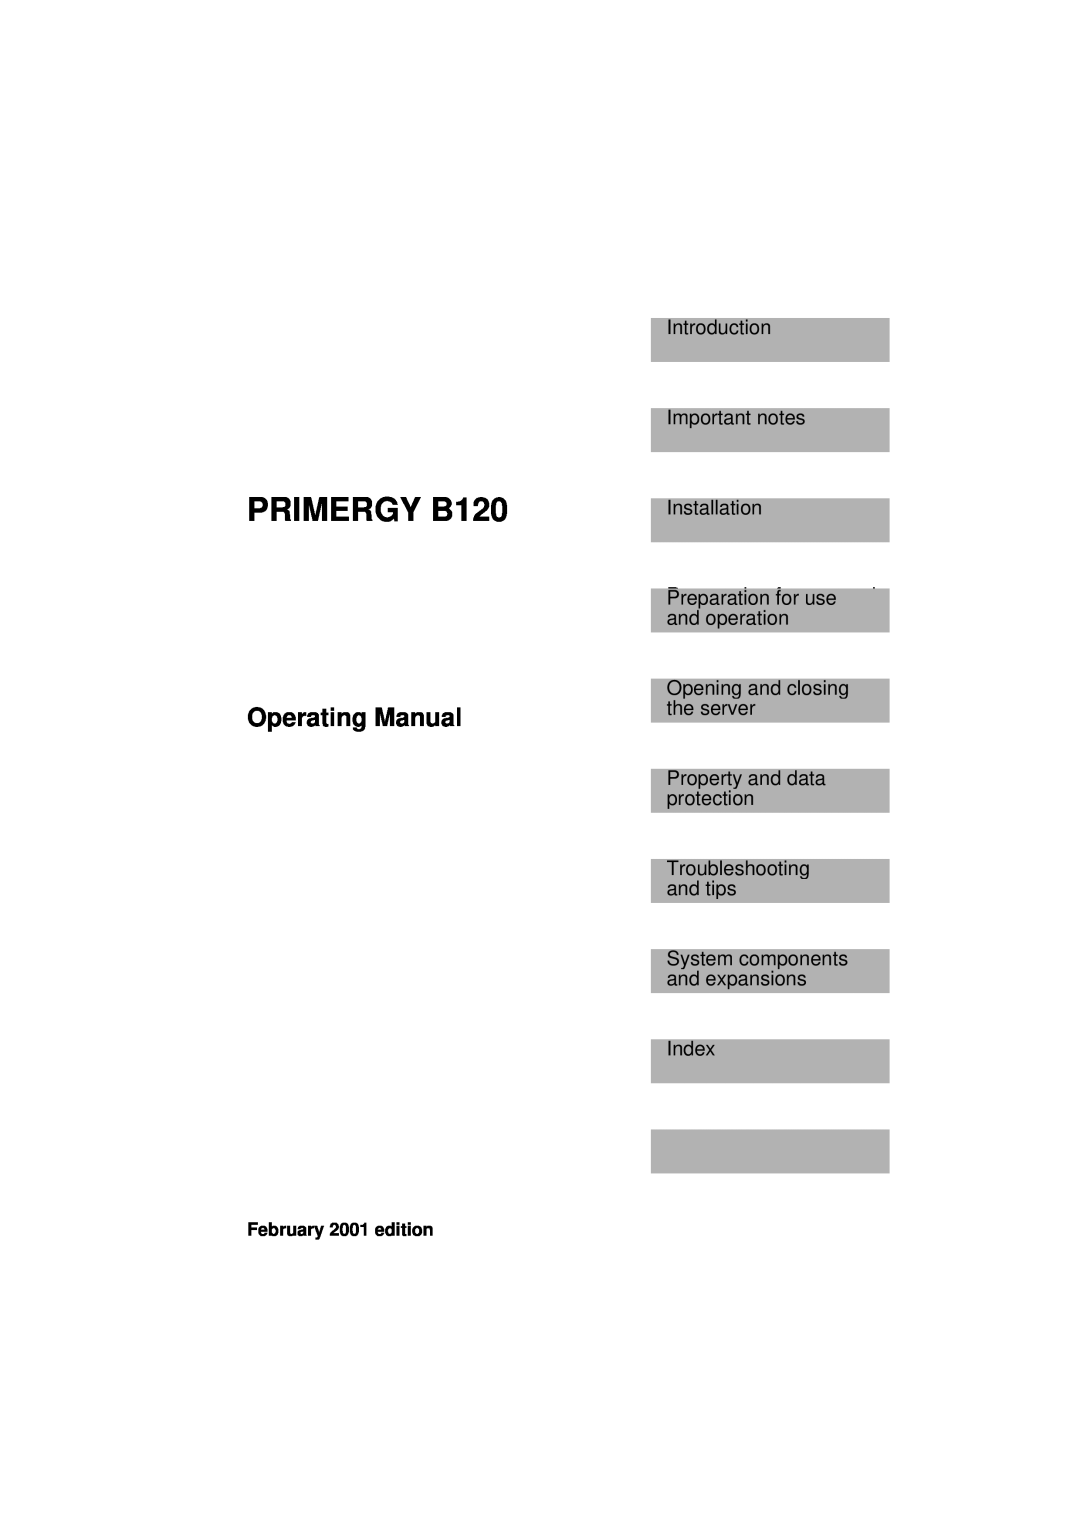 Fujitsu manual PRIMERGY B120, Operating Manual, Introduction Important notes Installation, February 2001 edition 